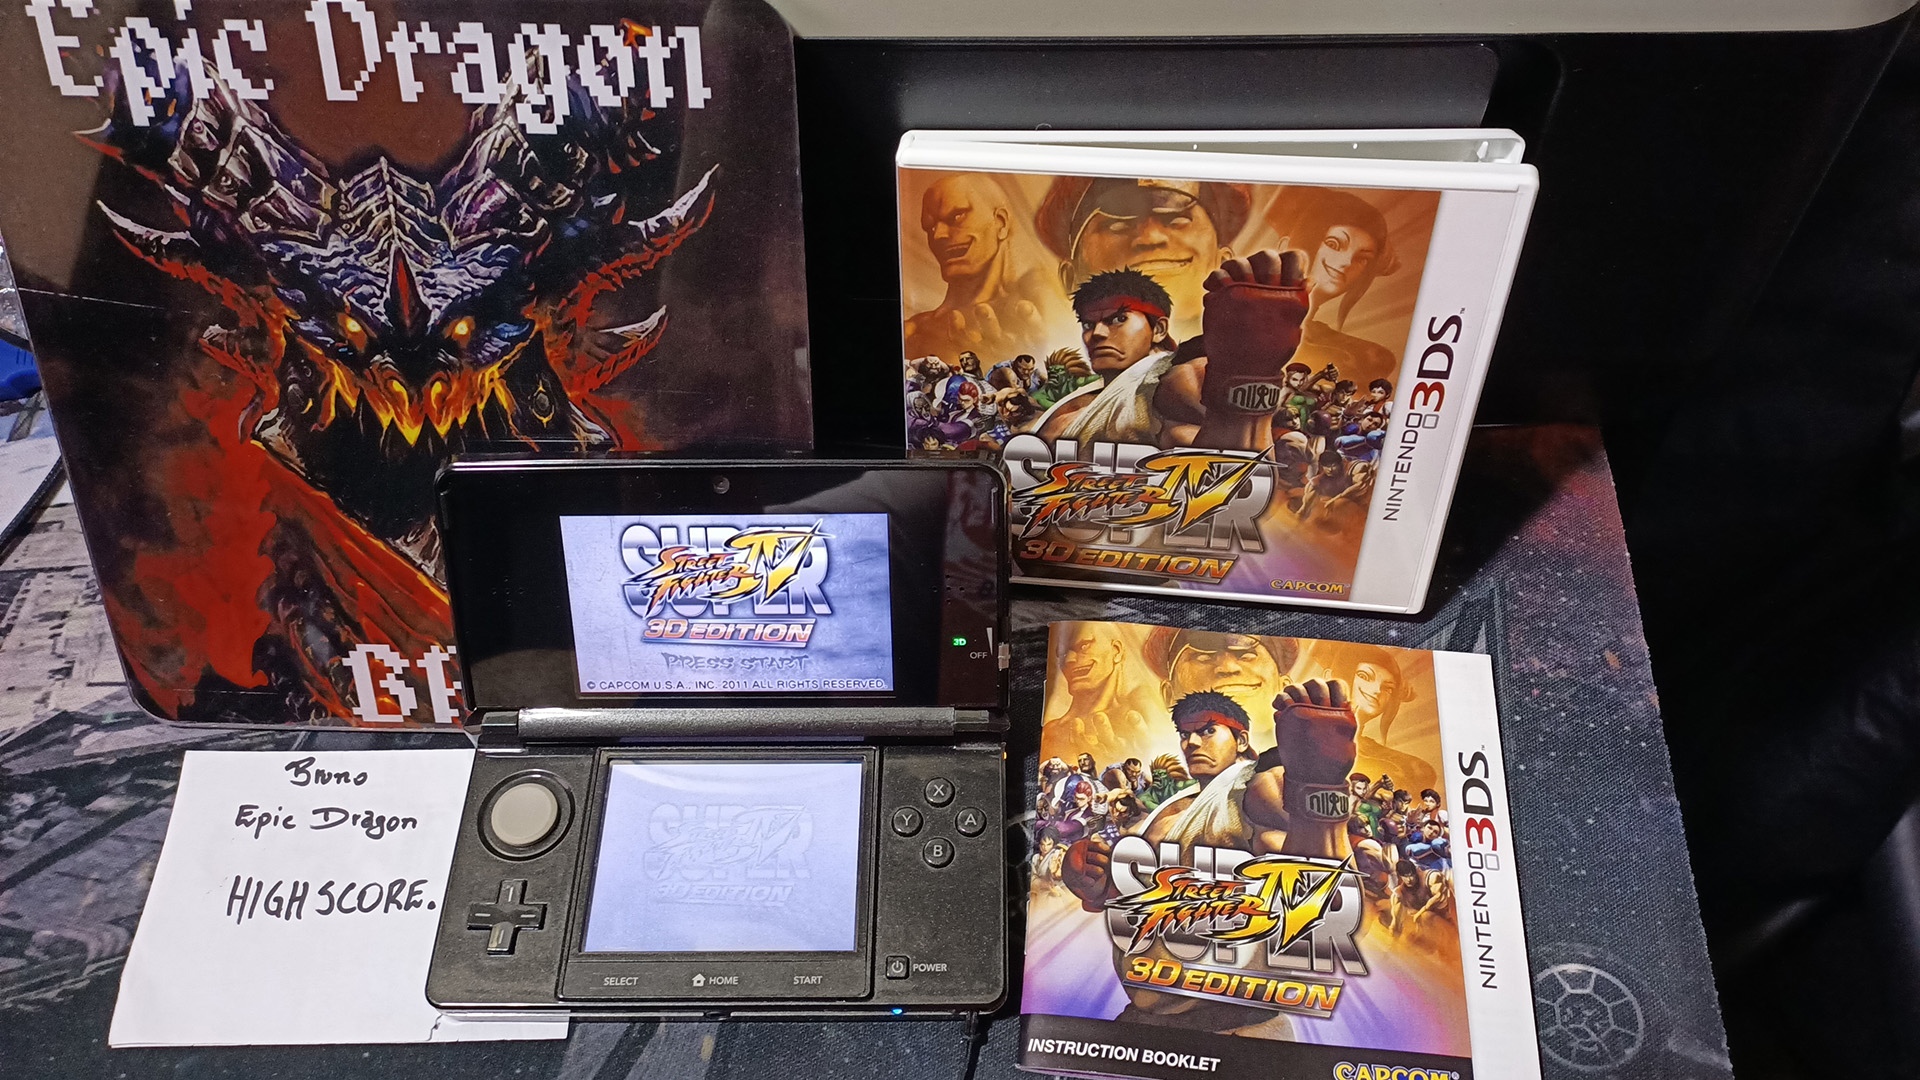 EpicDragon: Super Street Fighter IV 3D Edition: Arcade: Balrog [M. Bison in Japanese Version] (Nintendo 3DS) 195,400 points on 2022-08-01 20:50:04